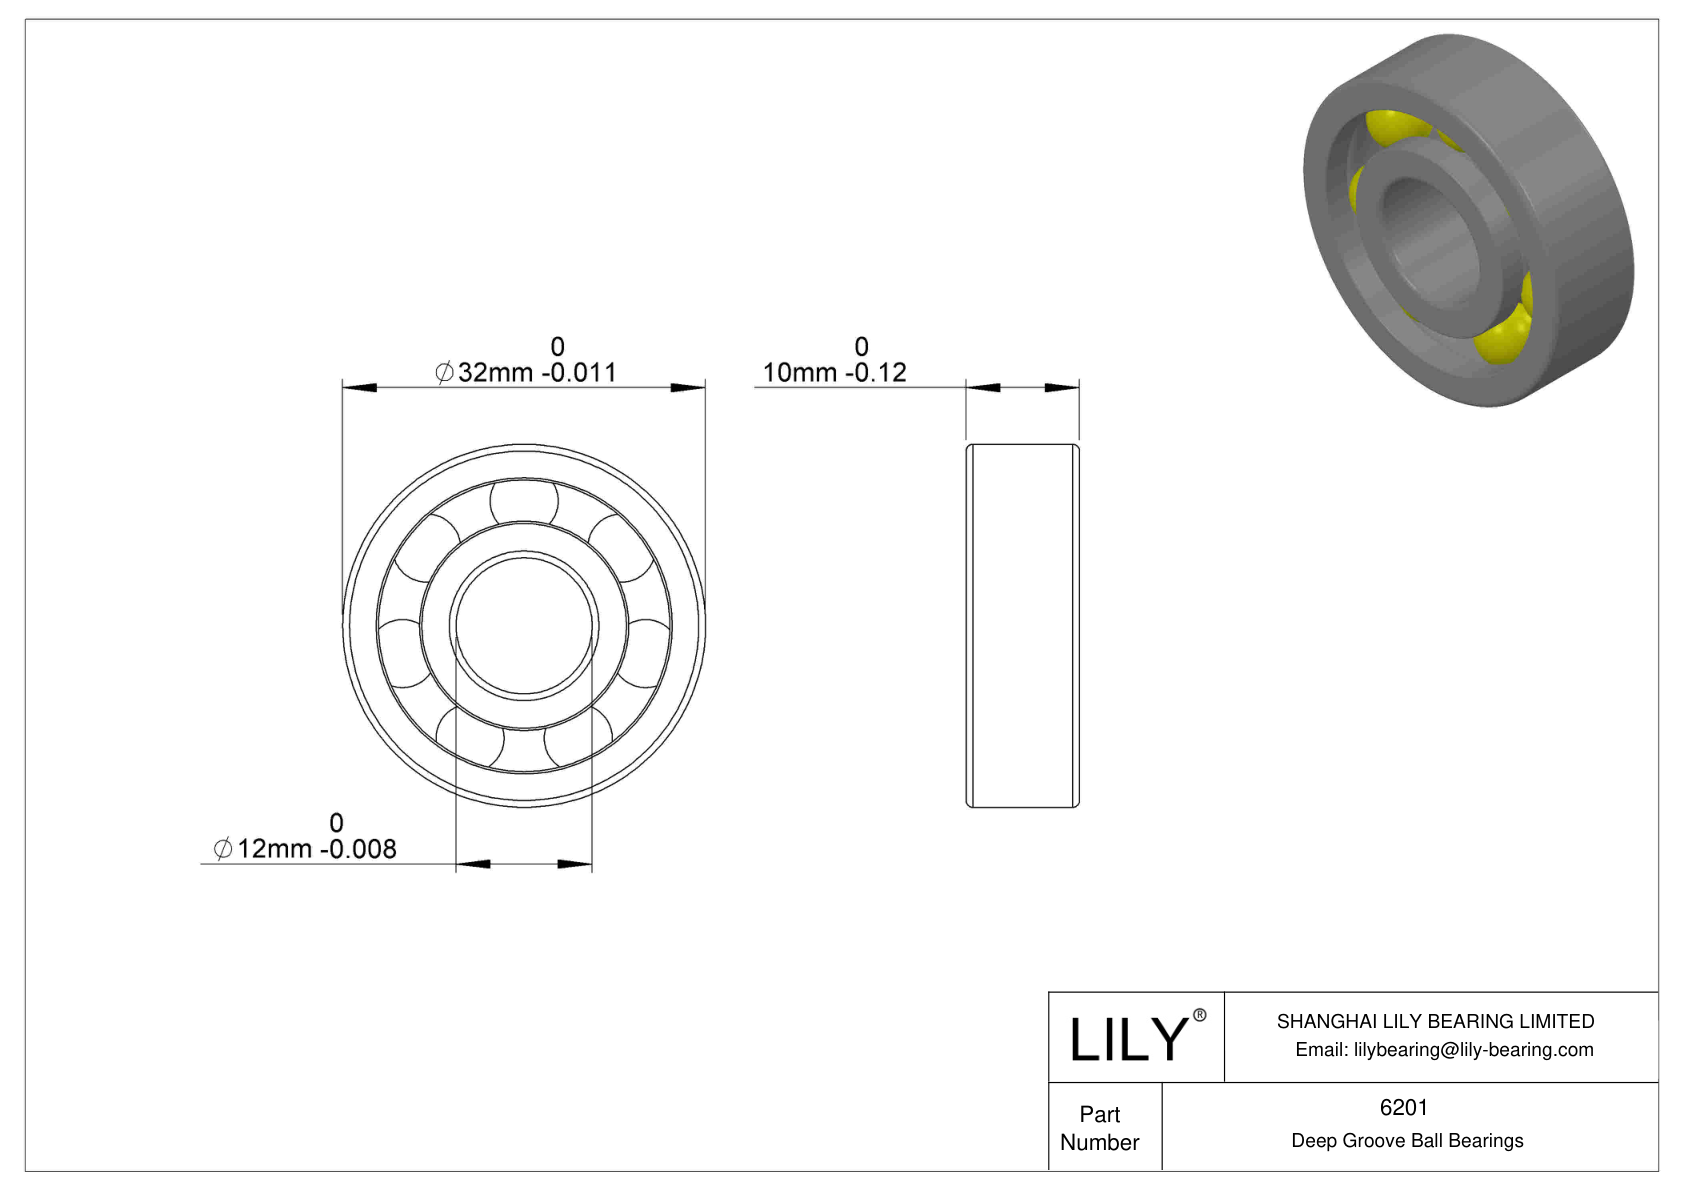 LILY-PU620140-18 Polyurethane Coated Bearing cad drawing